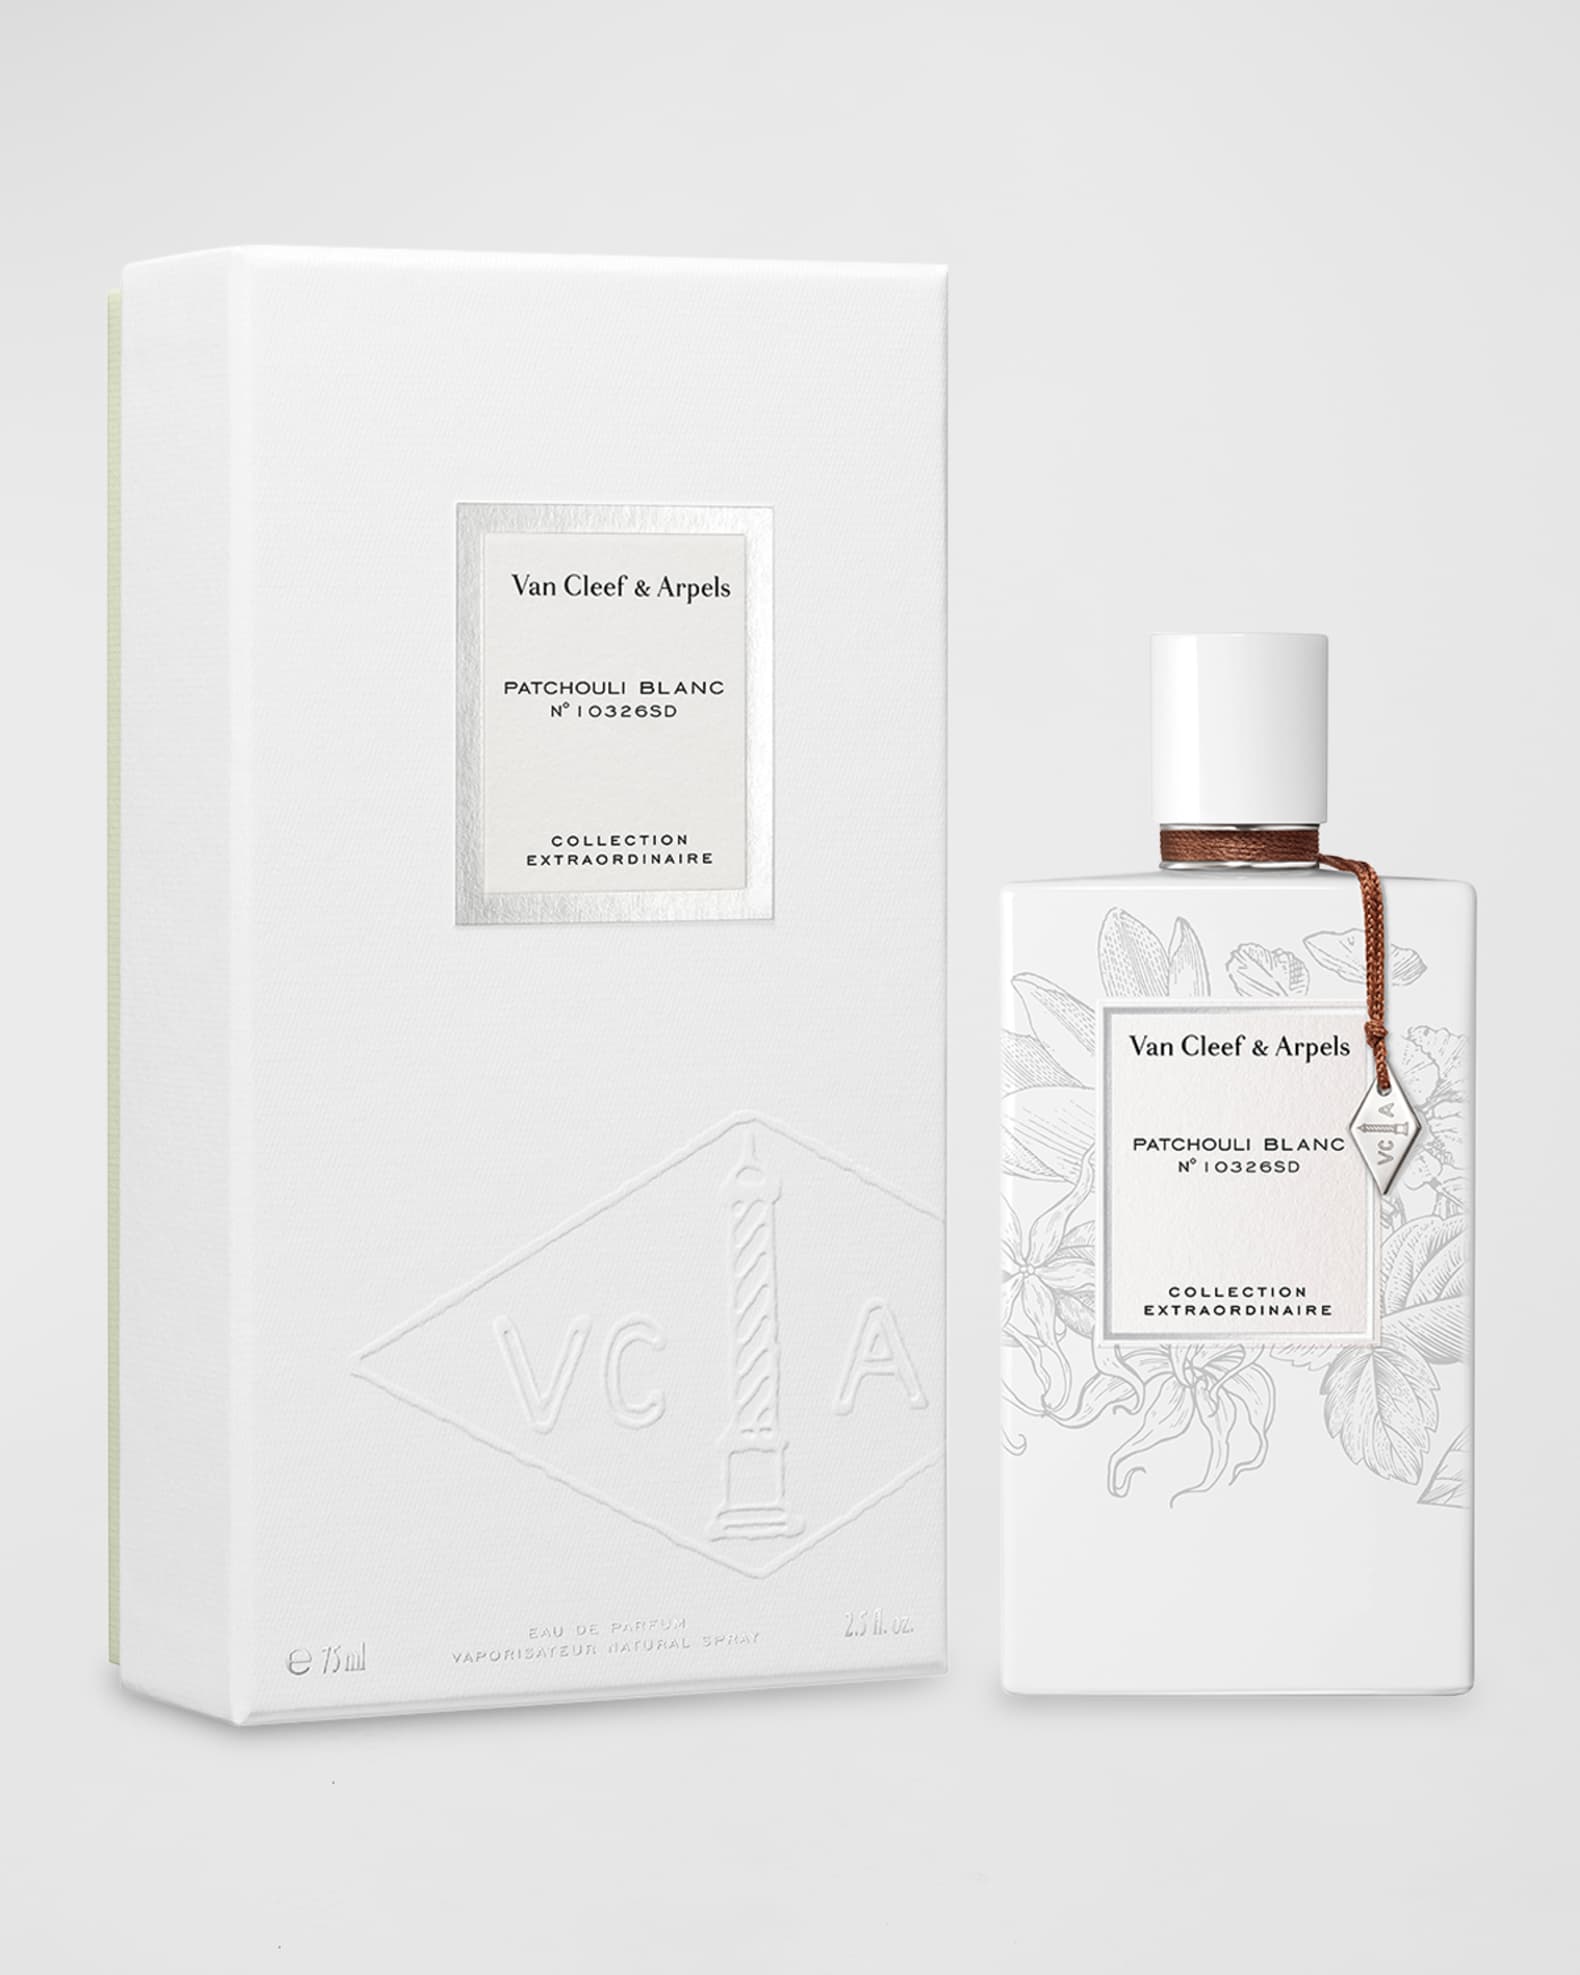 Fragrance World Essence de Blanc( LV Imagination